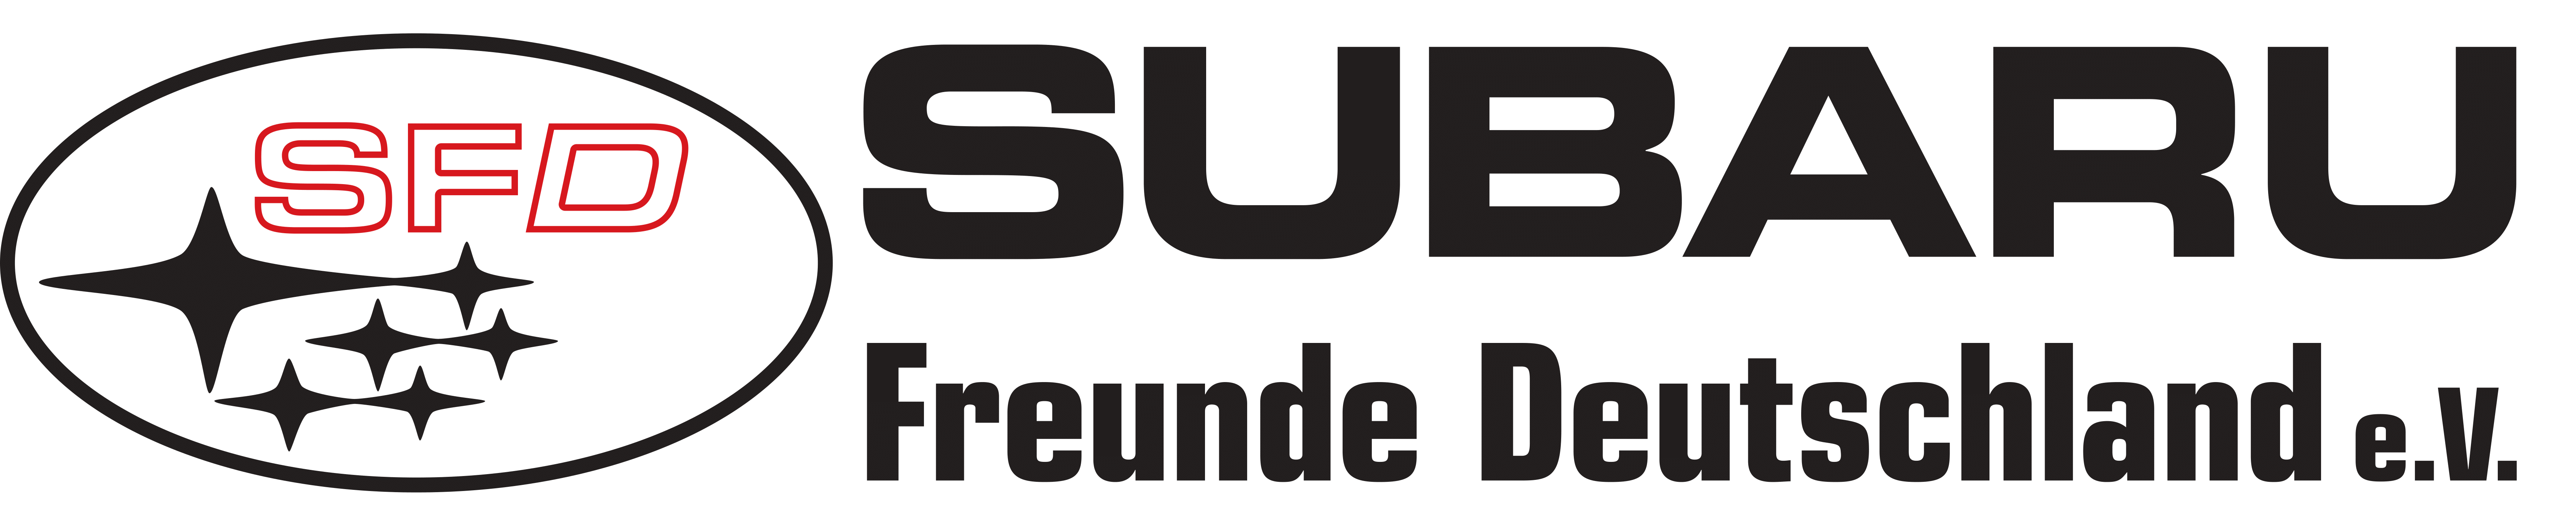 sfd-logo